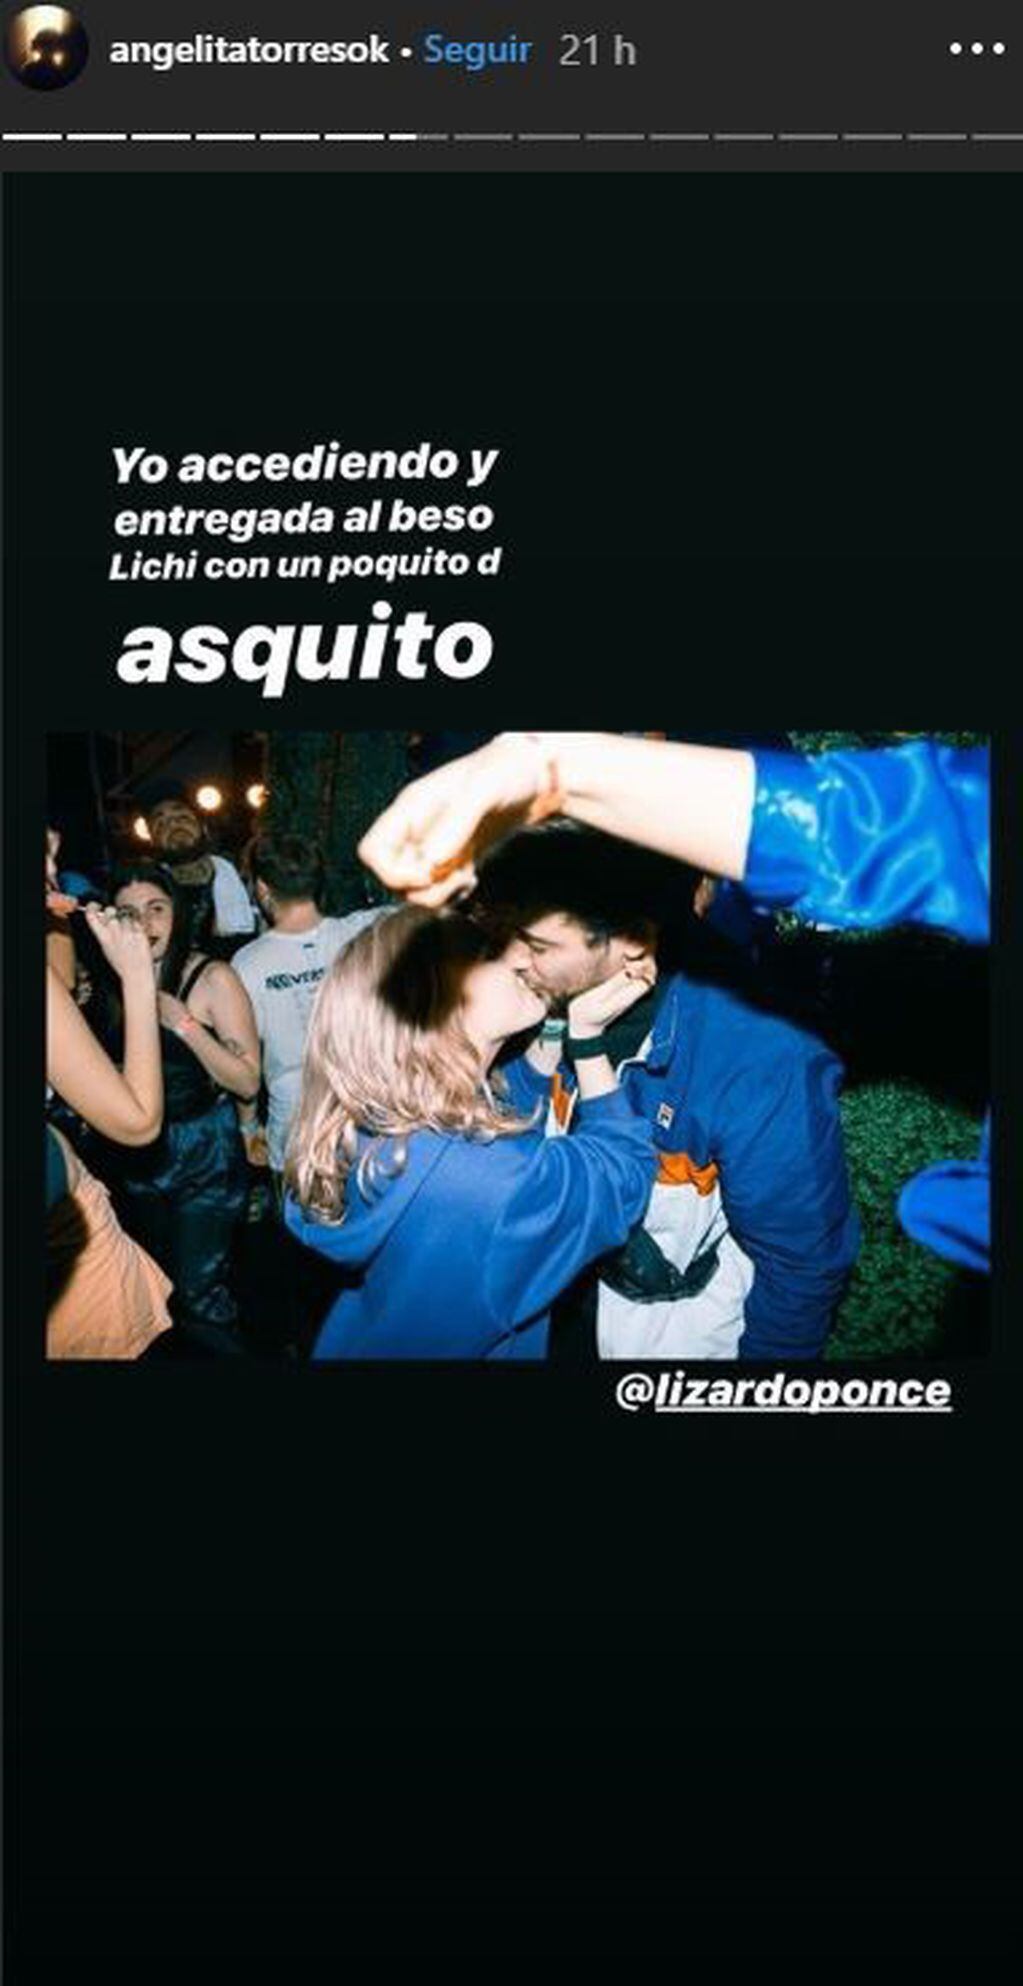 Ángela Torres besó con "asquito" a su amigo. (Instagram/@angelitatorresok)